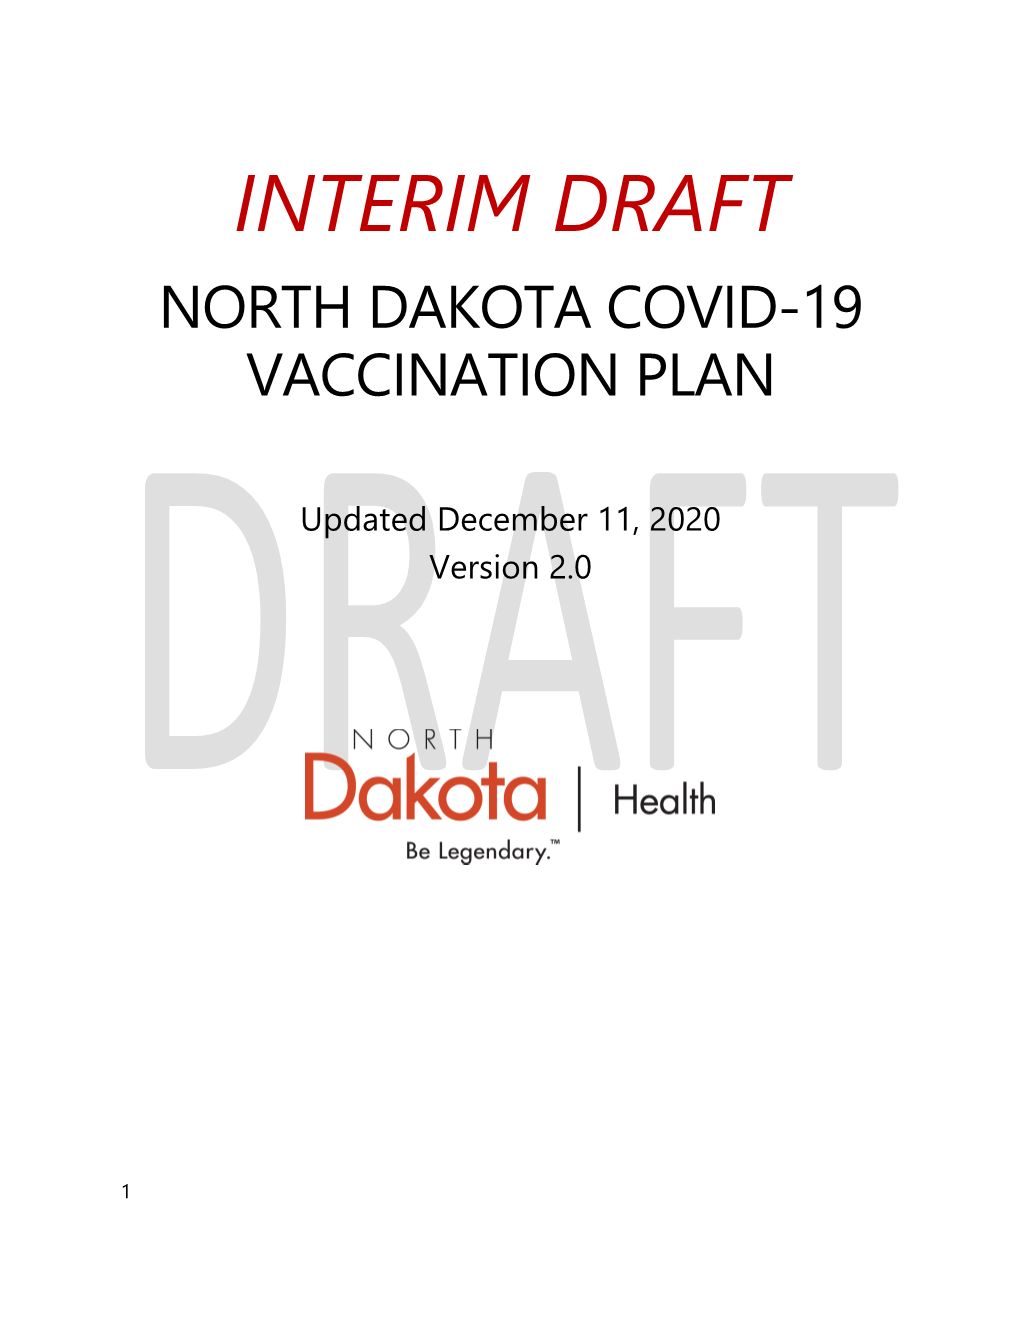 North Dakota Covid-19 Vaccination Plan